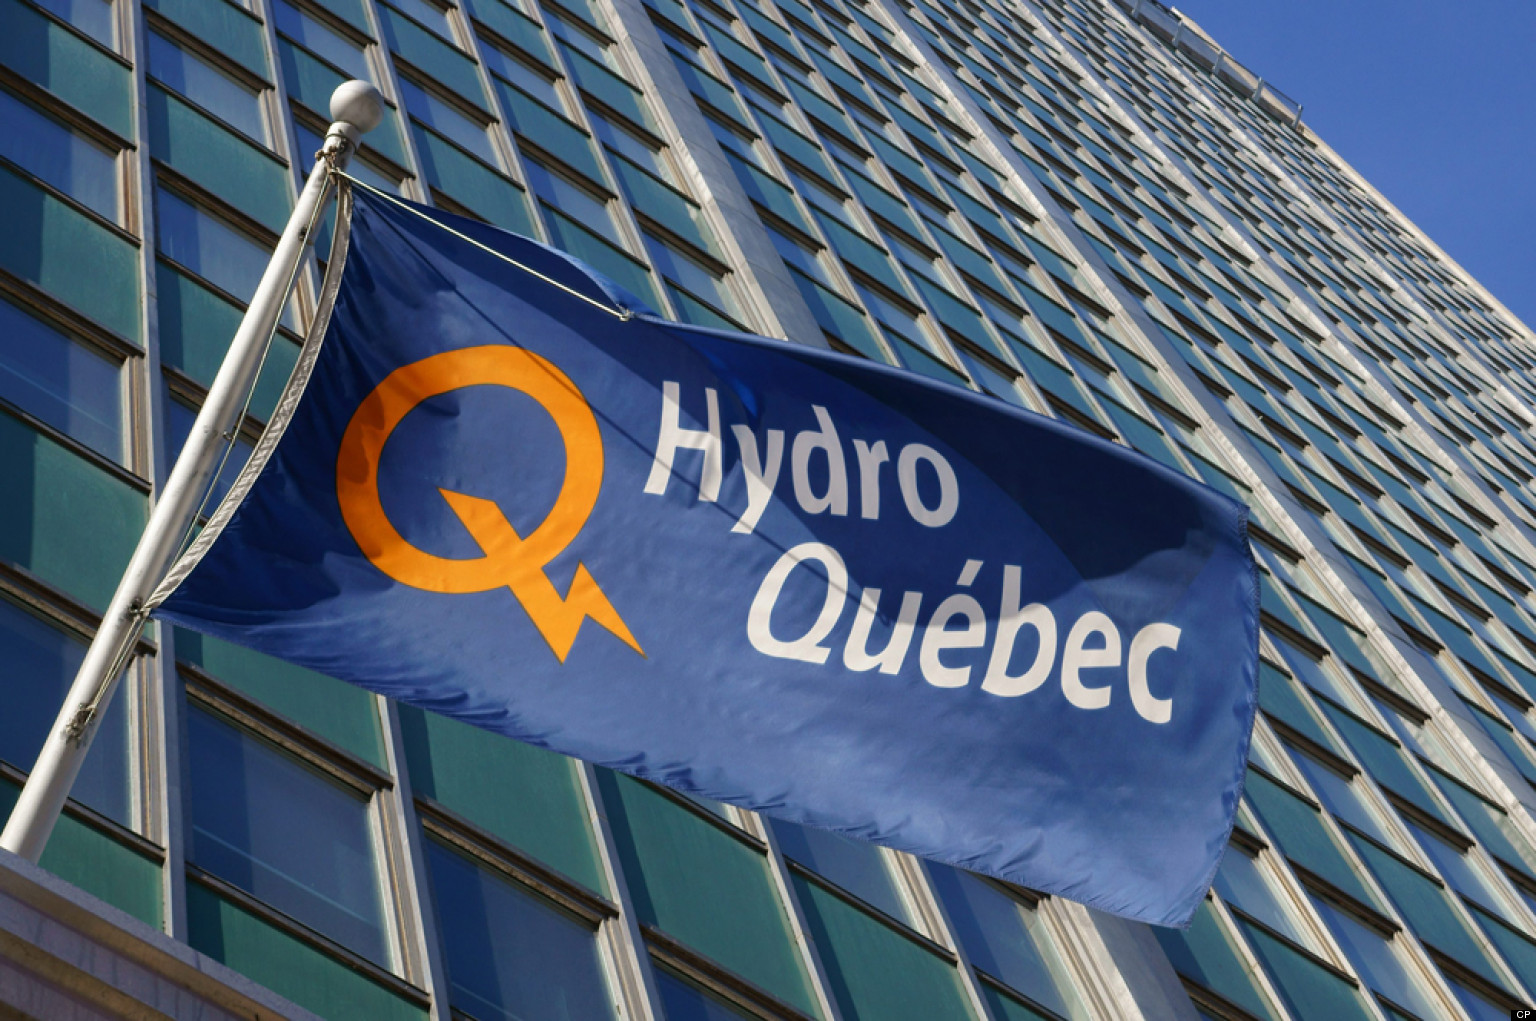 Hydro Quebec Power